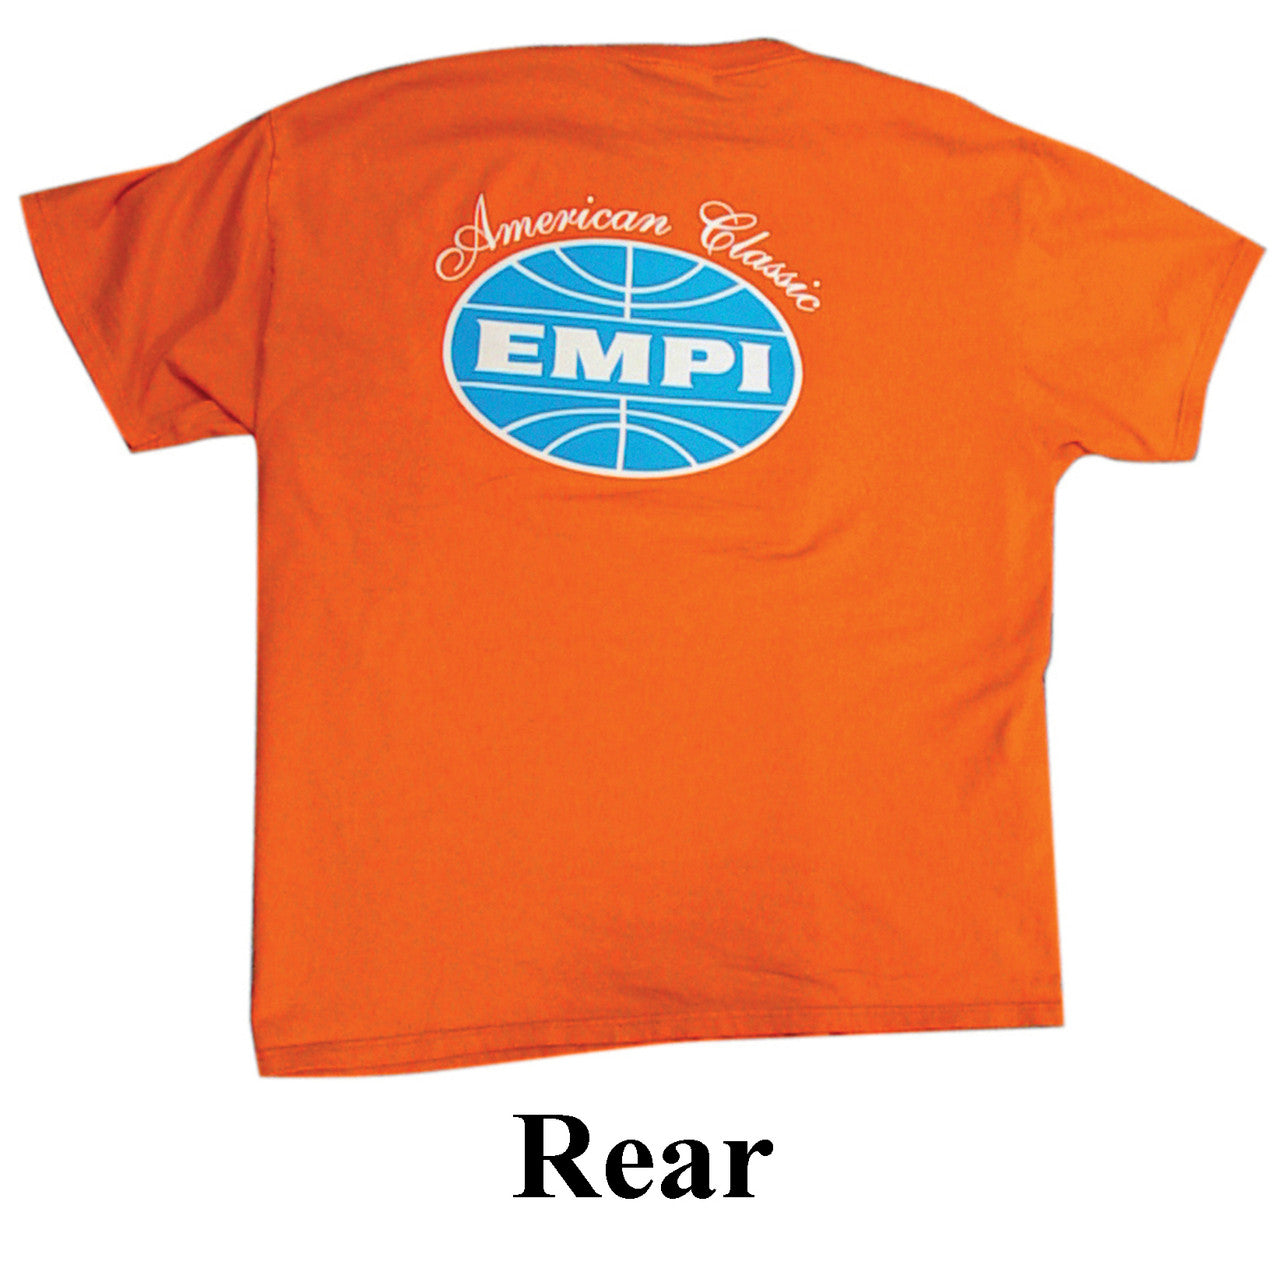 Empi 15-4025 American Classic Orange T-Shirt, Large